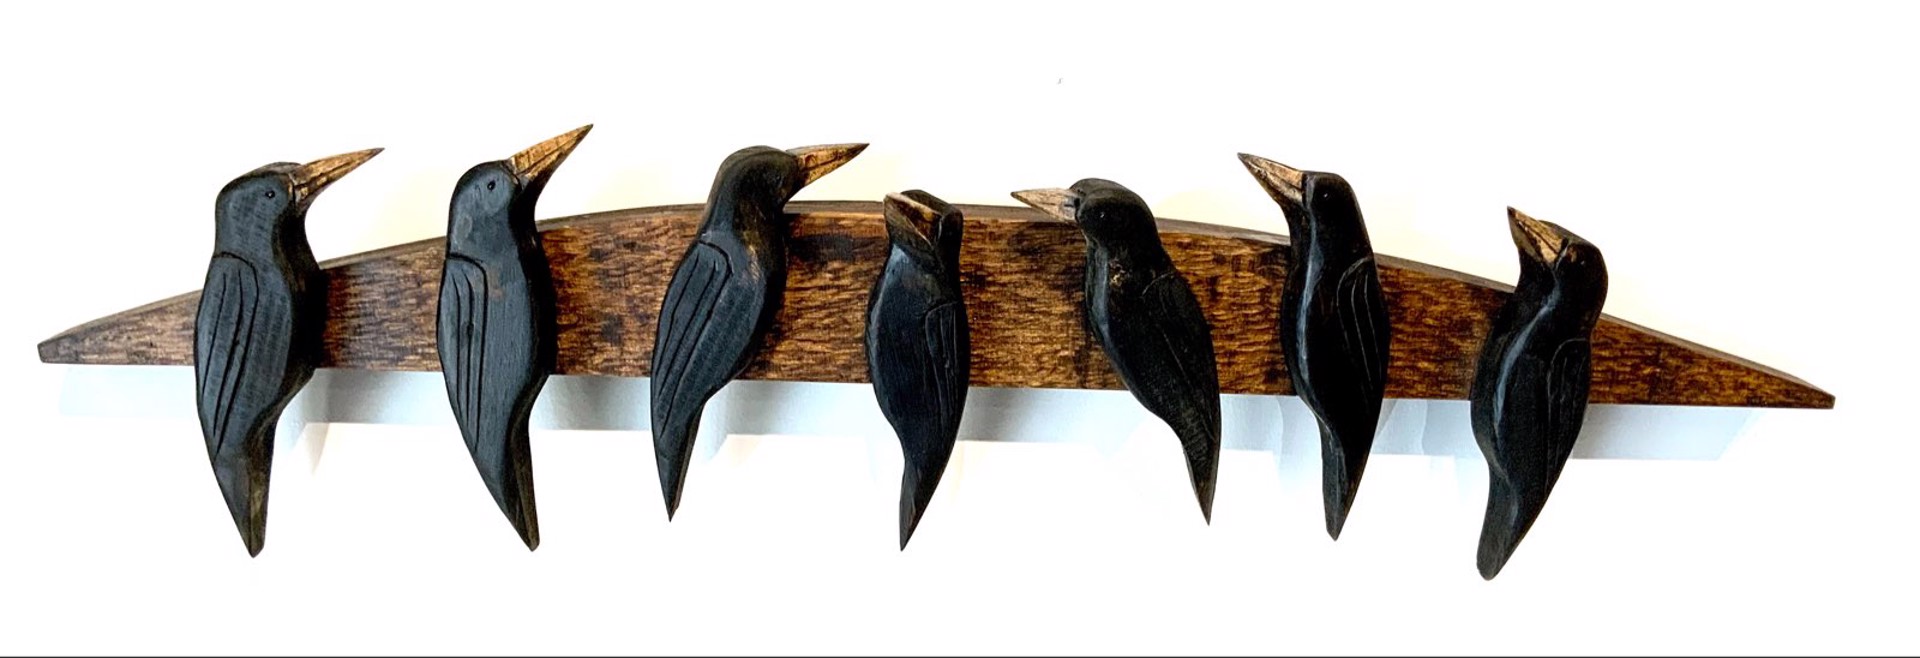 Crow Pediment by BJ Precourt